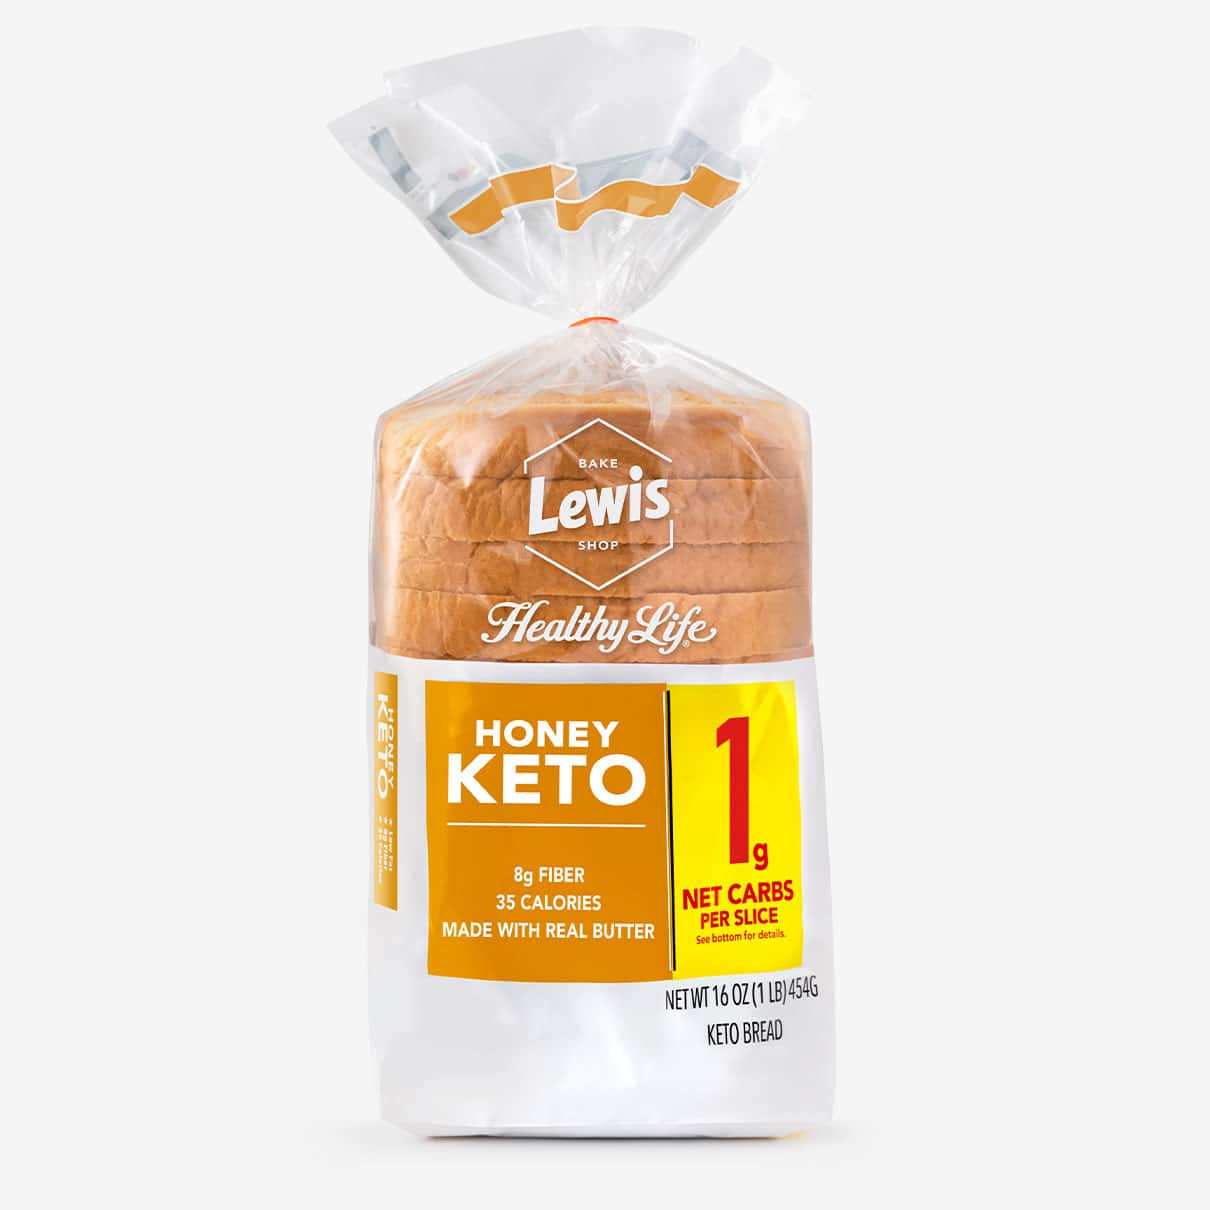 A packet of Lewis Bake Shop Honey Keto Bread.